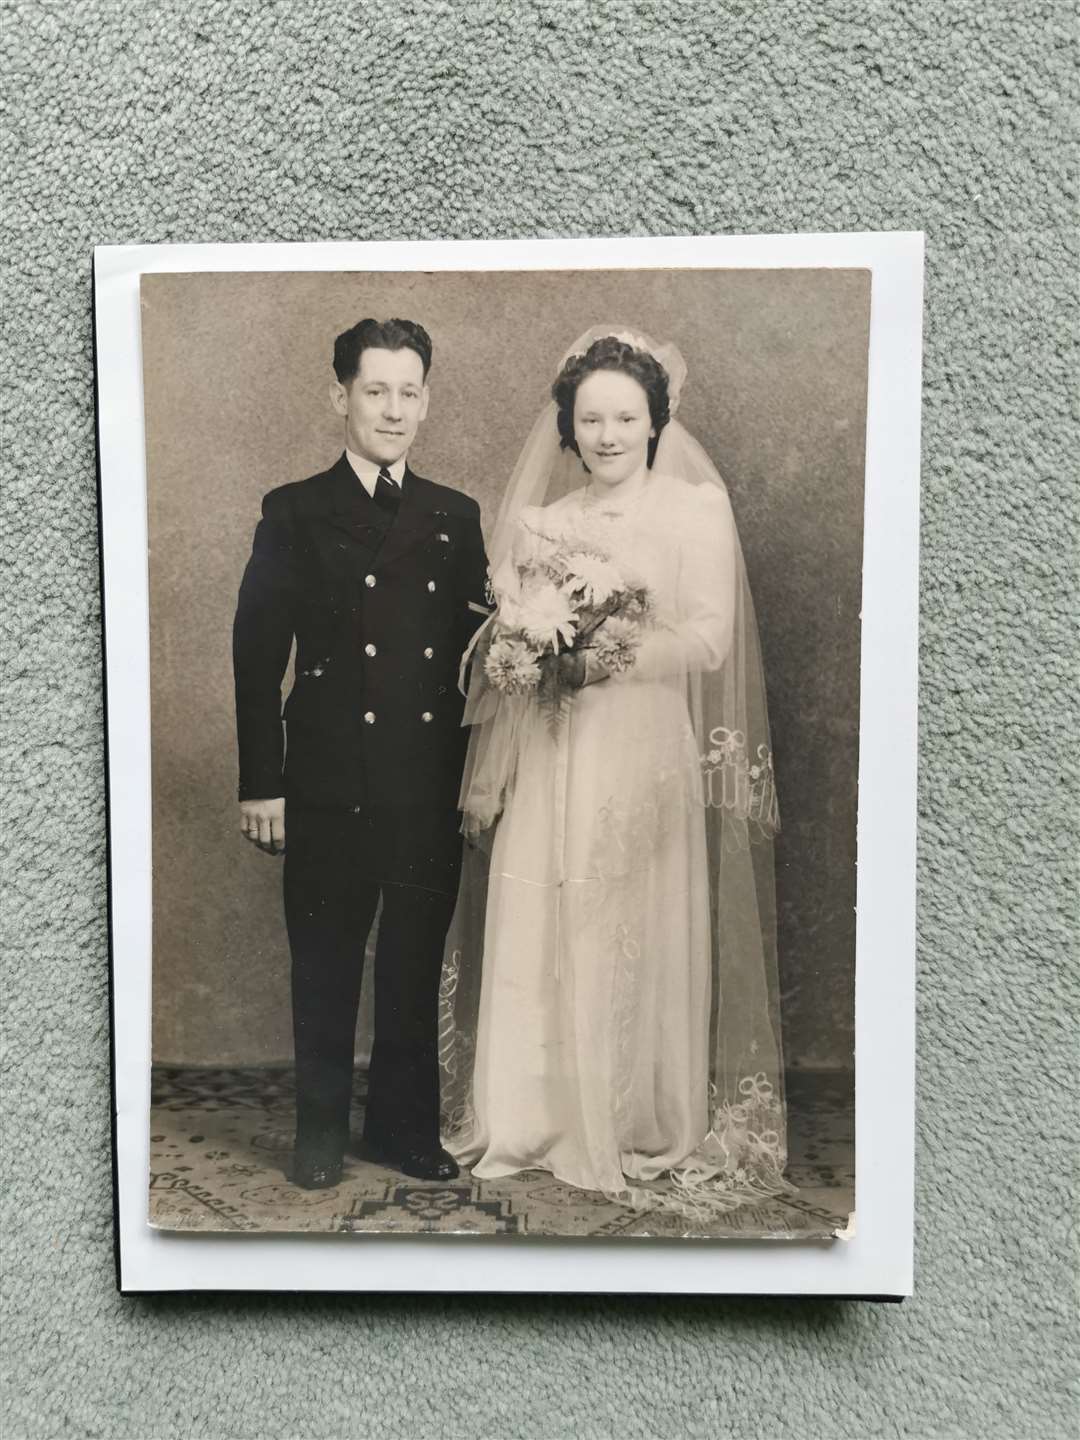 Cyril married Helen in December 1944 in Greenock, Scotland